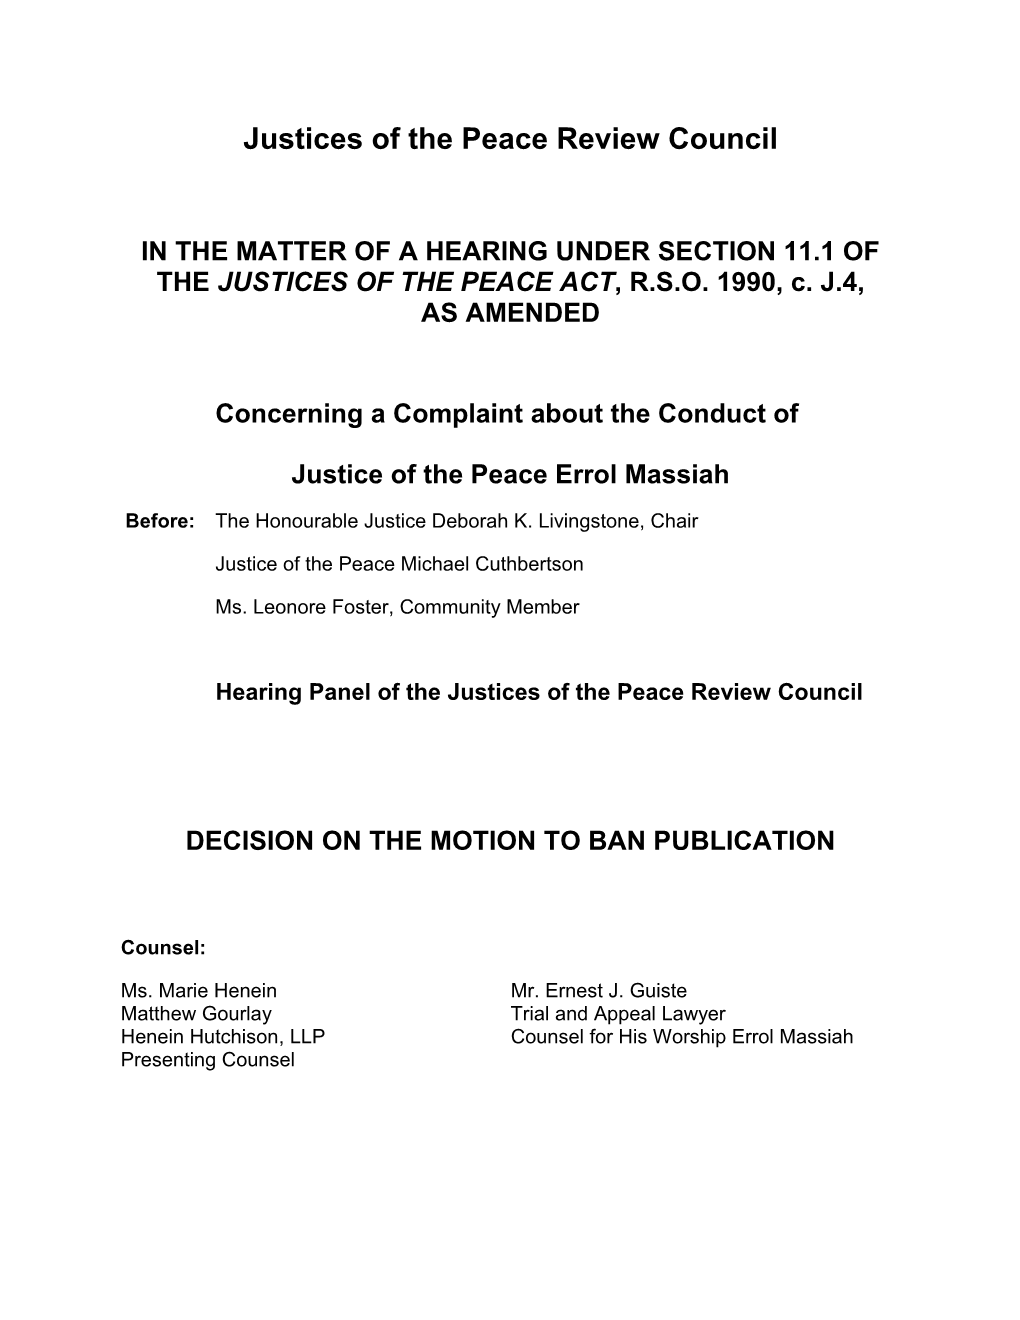 Justice of the Peace Errol Massiah